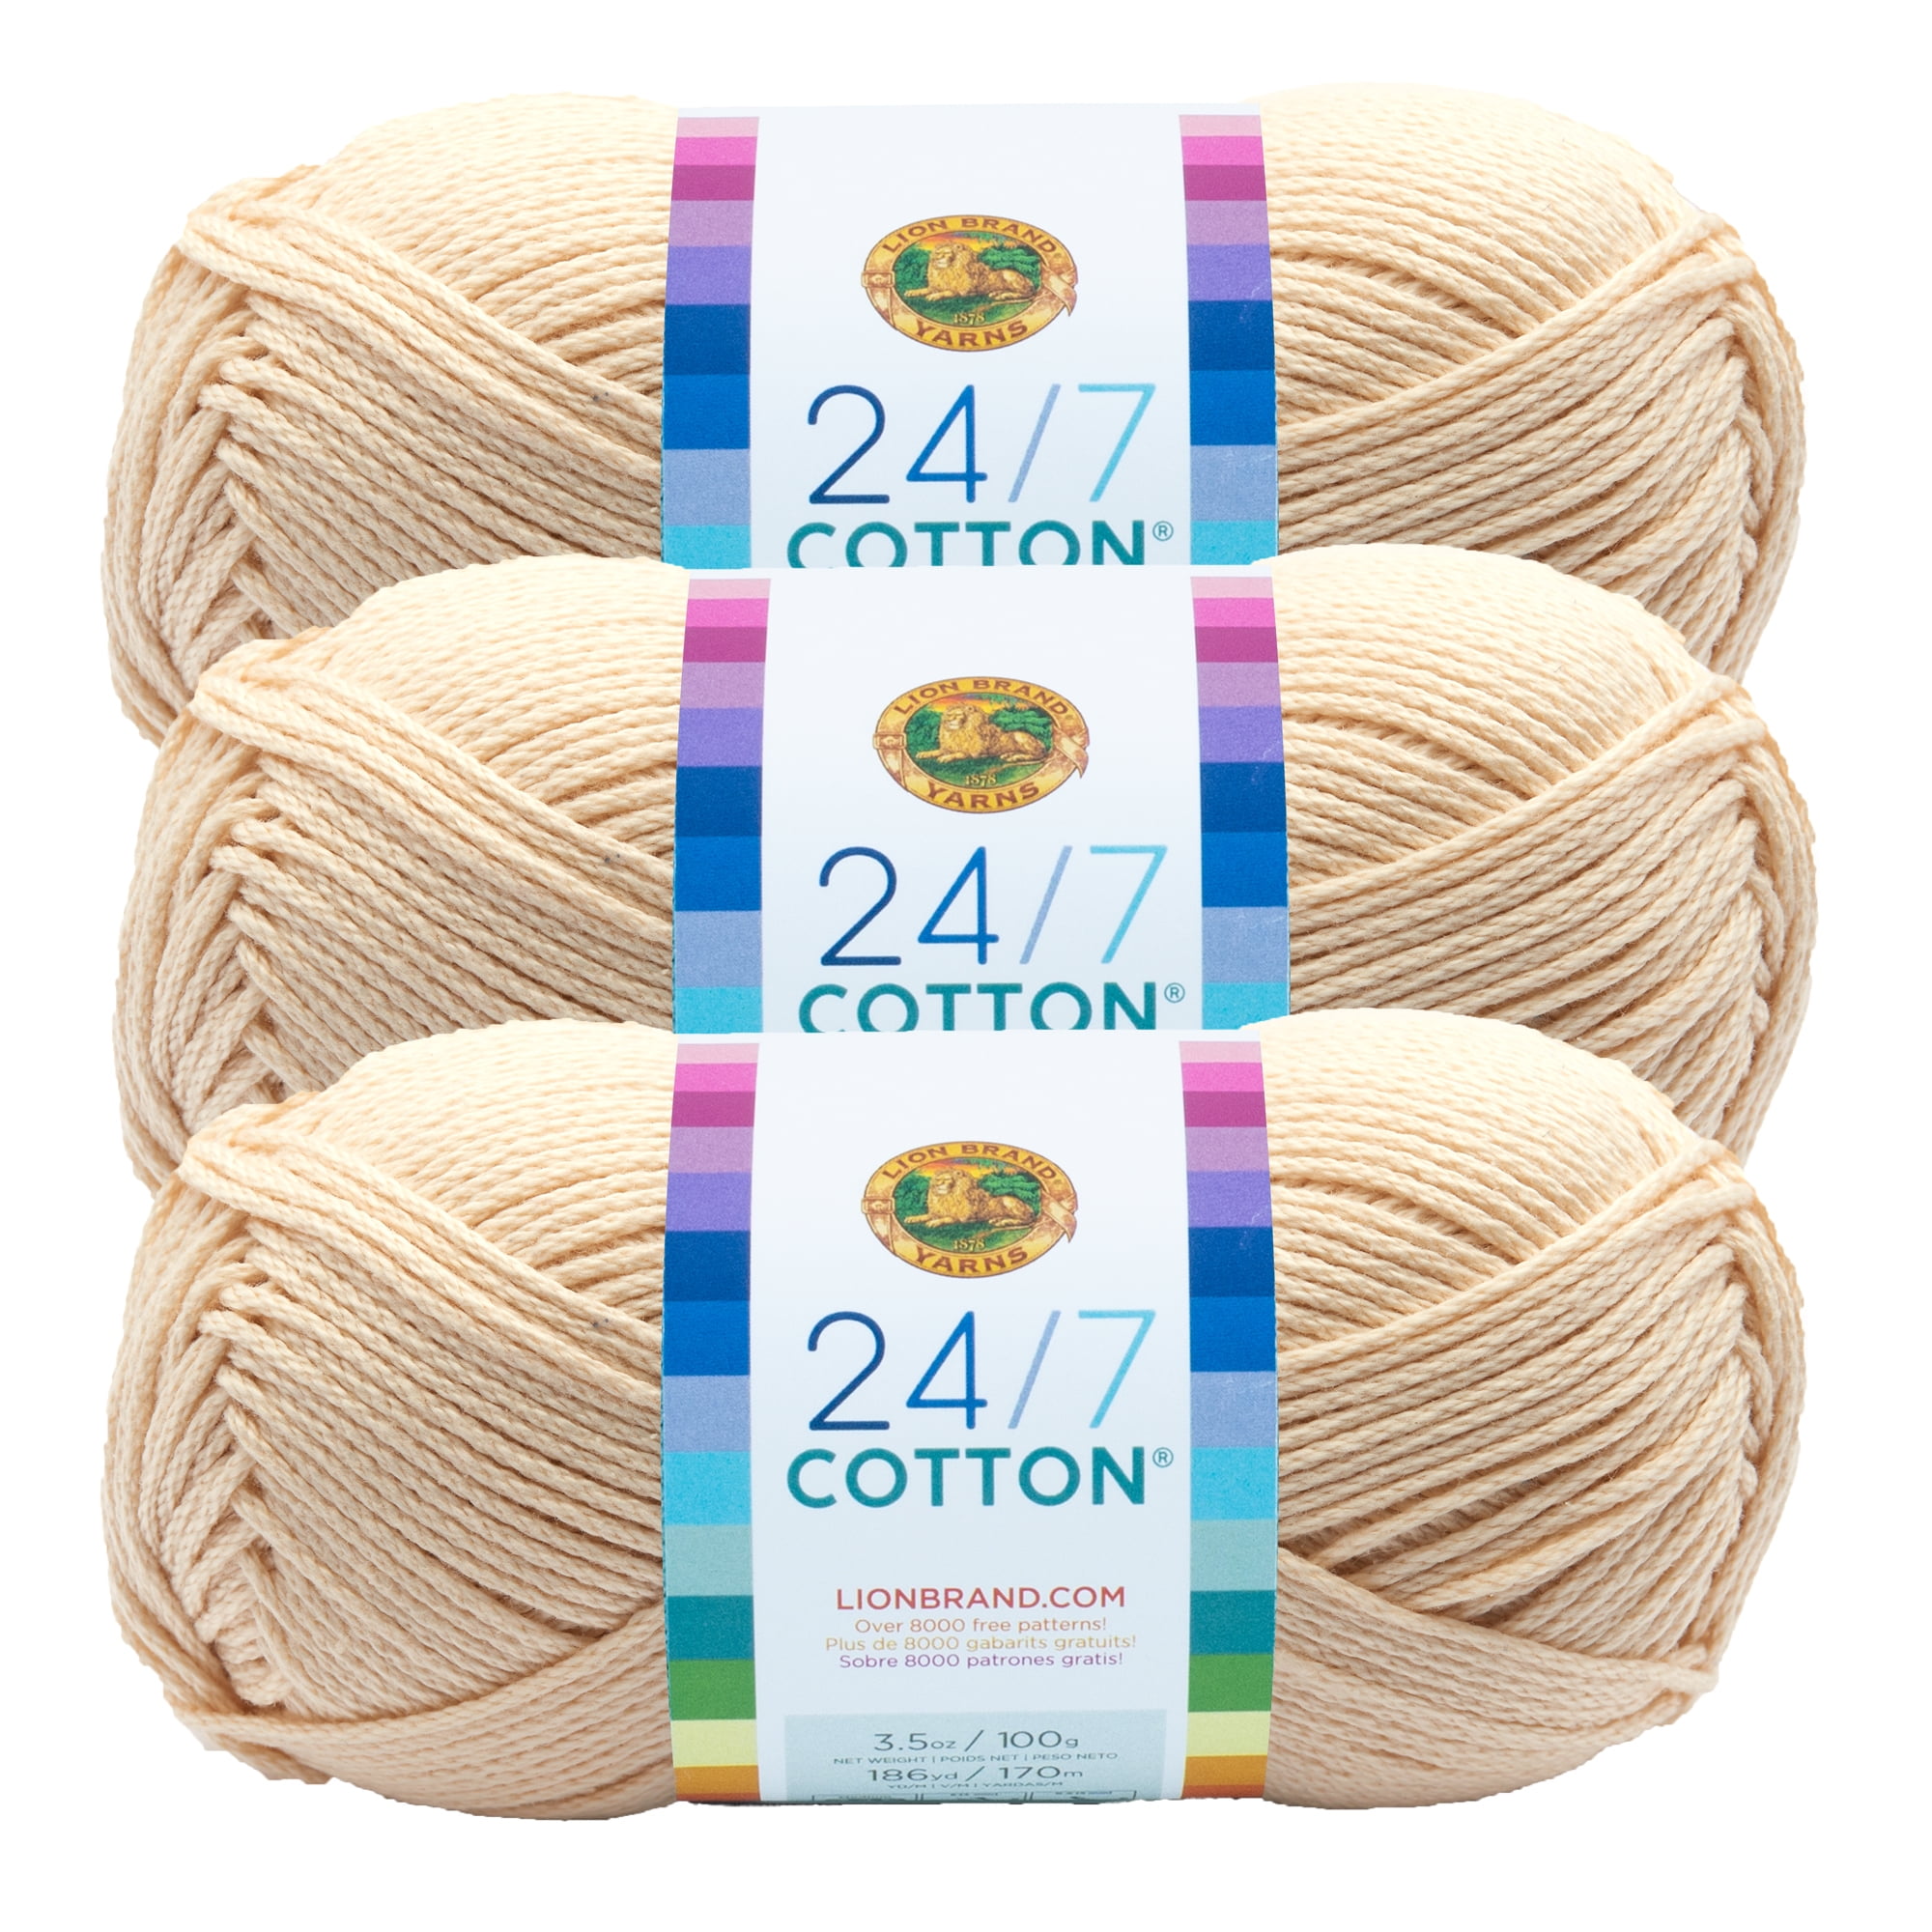 Lion Brand Yarn Orchid, 24/7 Cotton Yarn, Mercerized Cotton Yarn